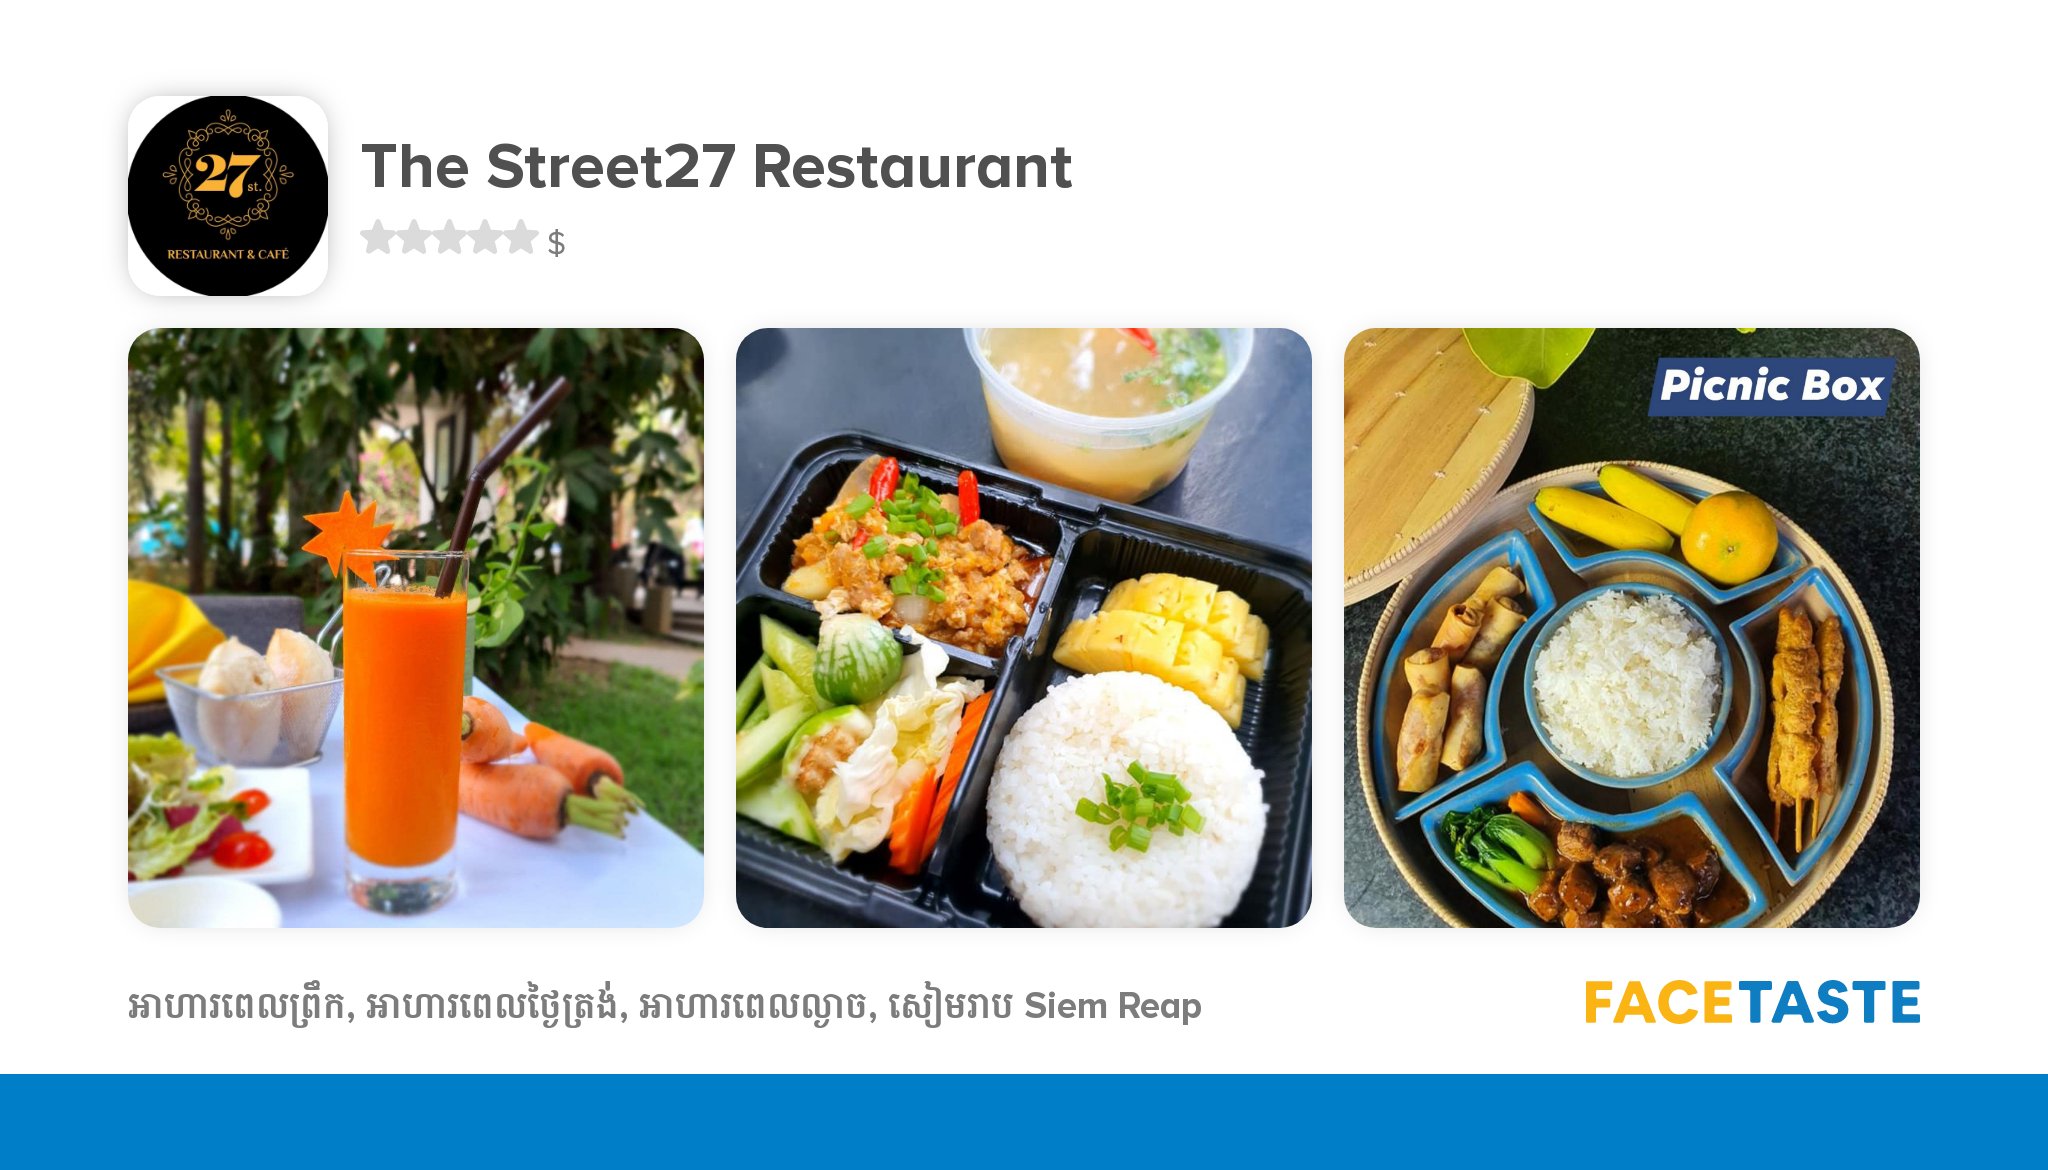 The Street27 Restaurant